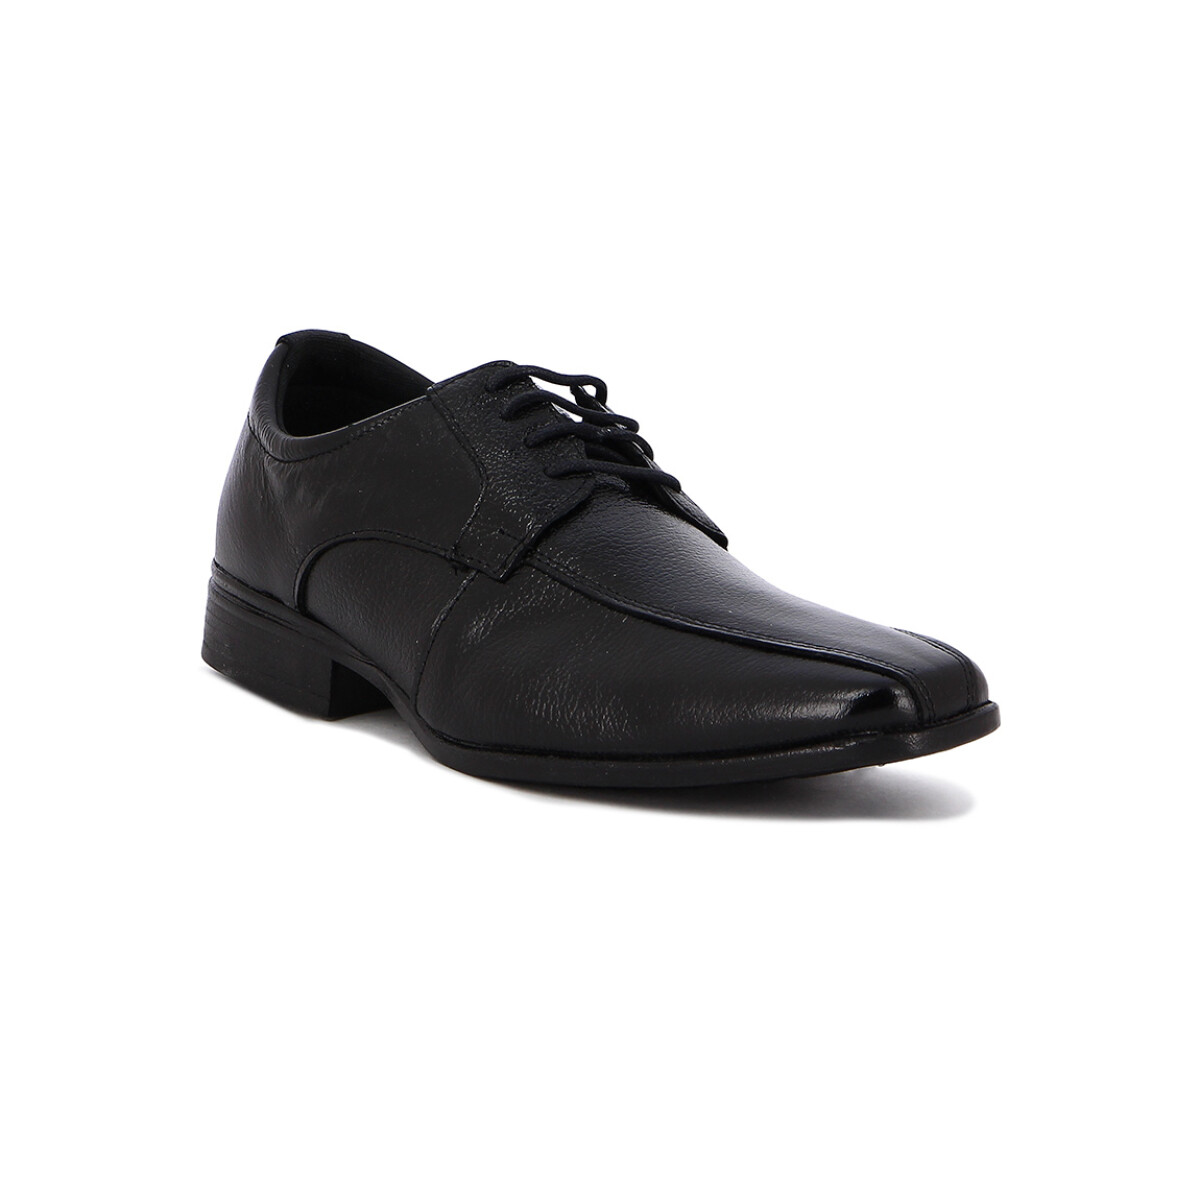 Country Zapato Hombre Casual C/ Cordones - Negro 